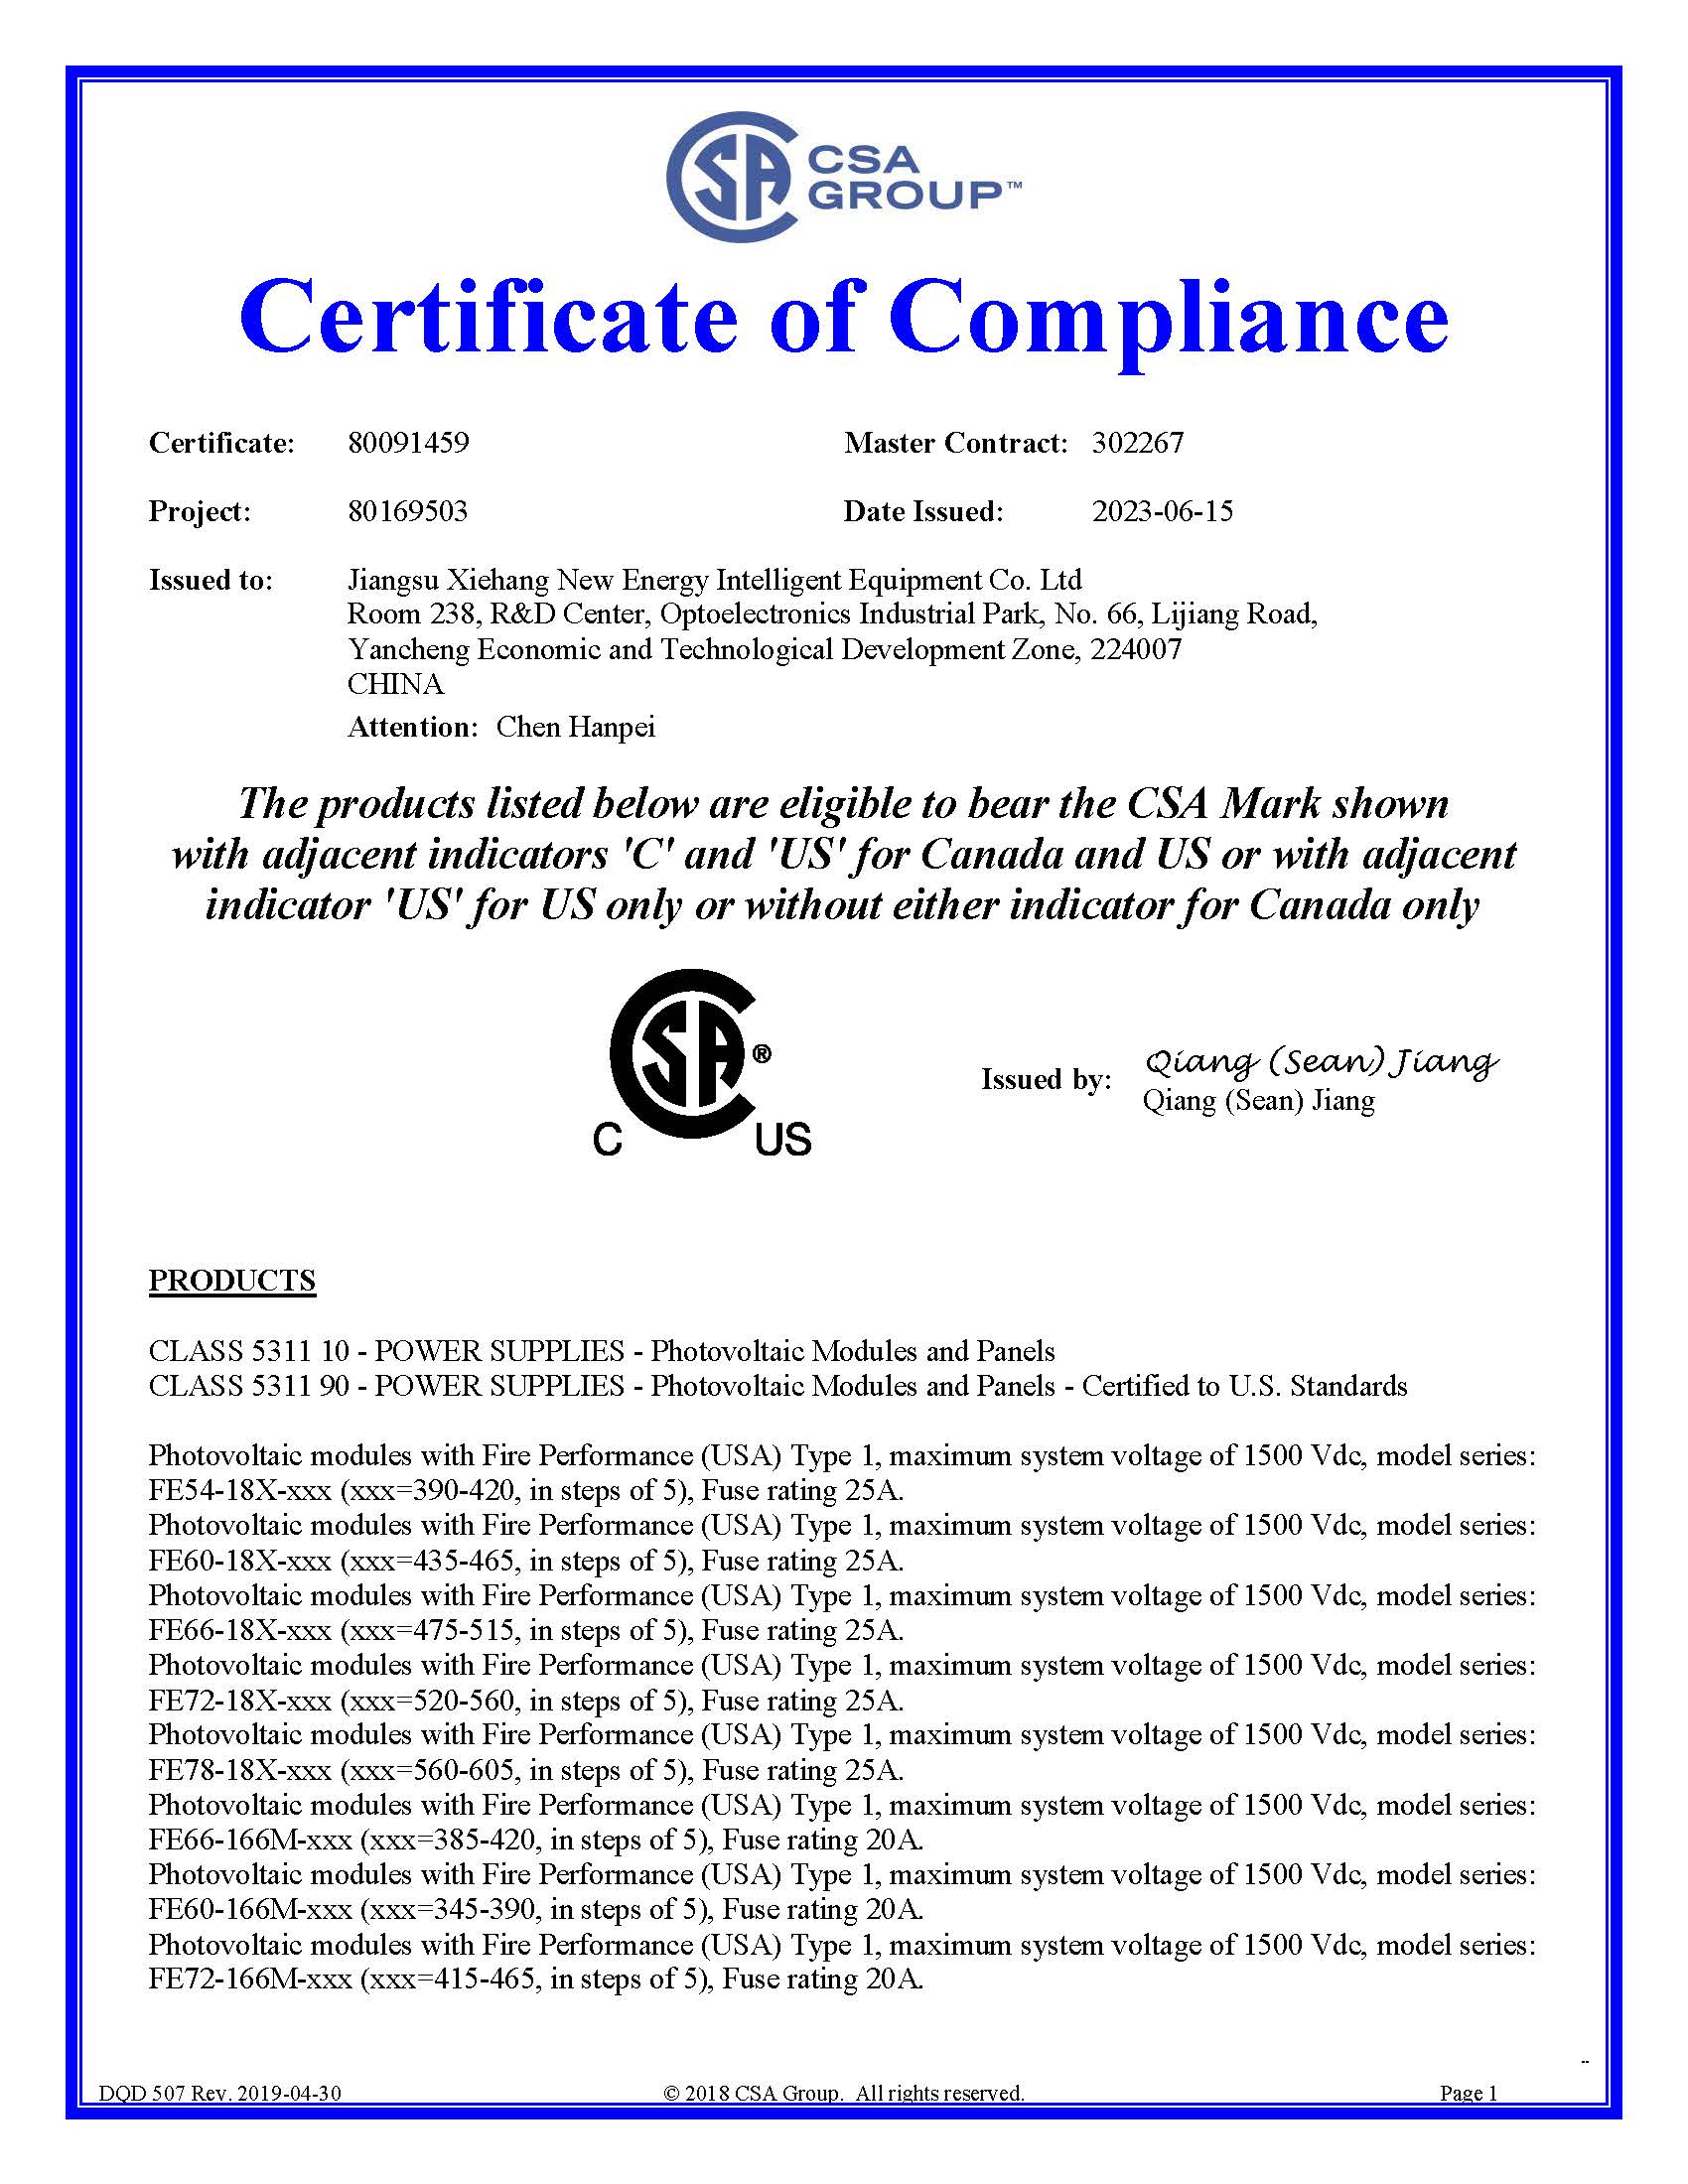 Certificate of Compliance - CSA